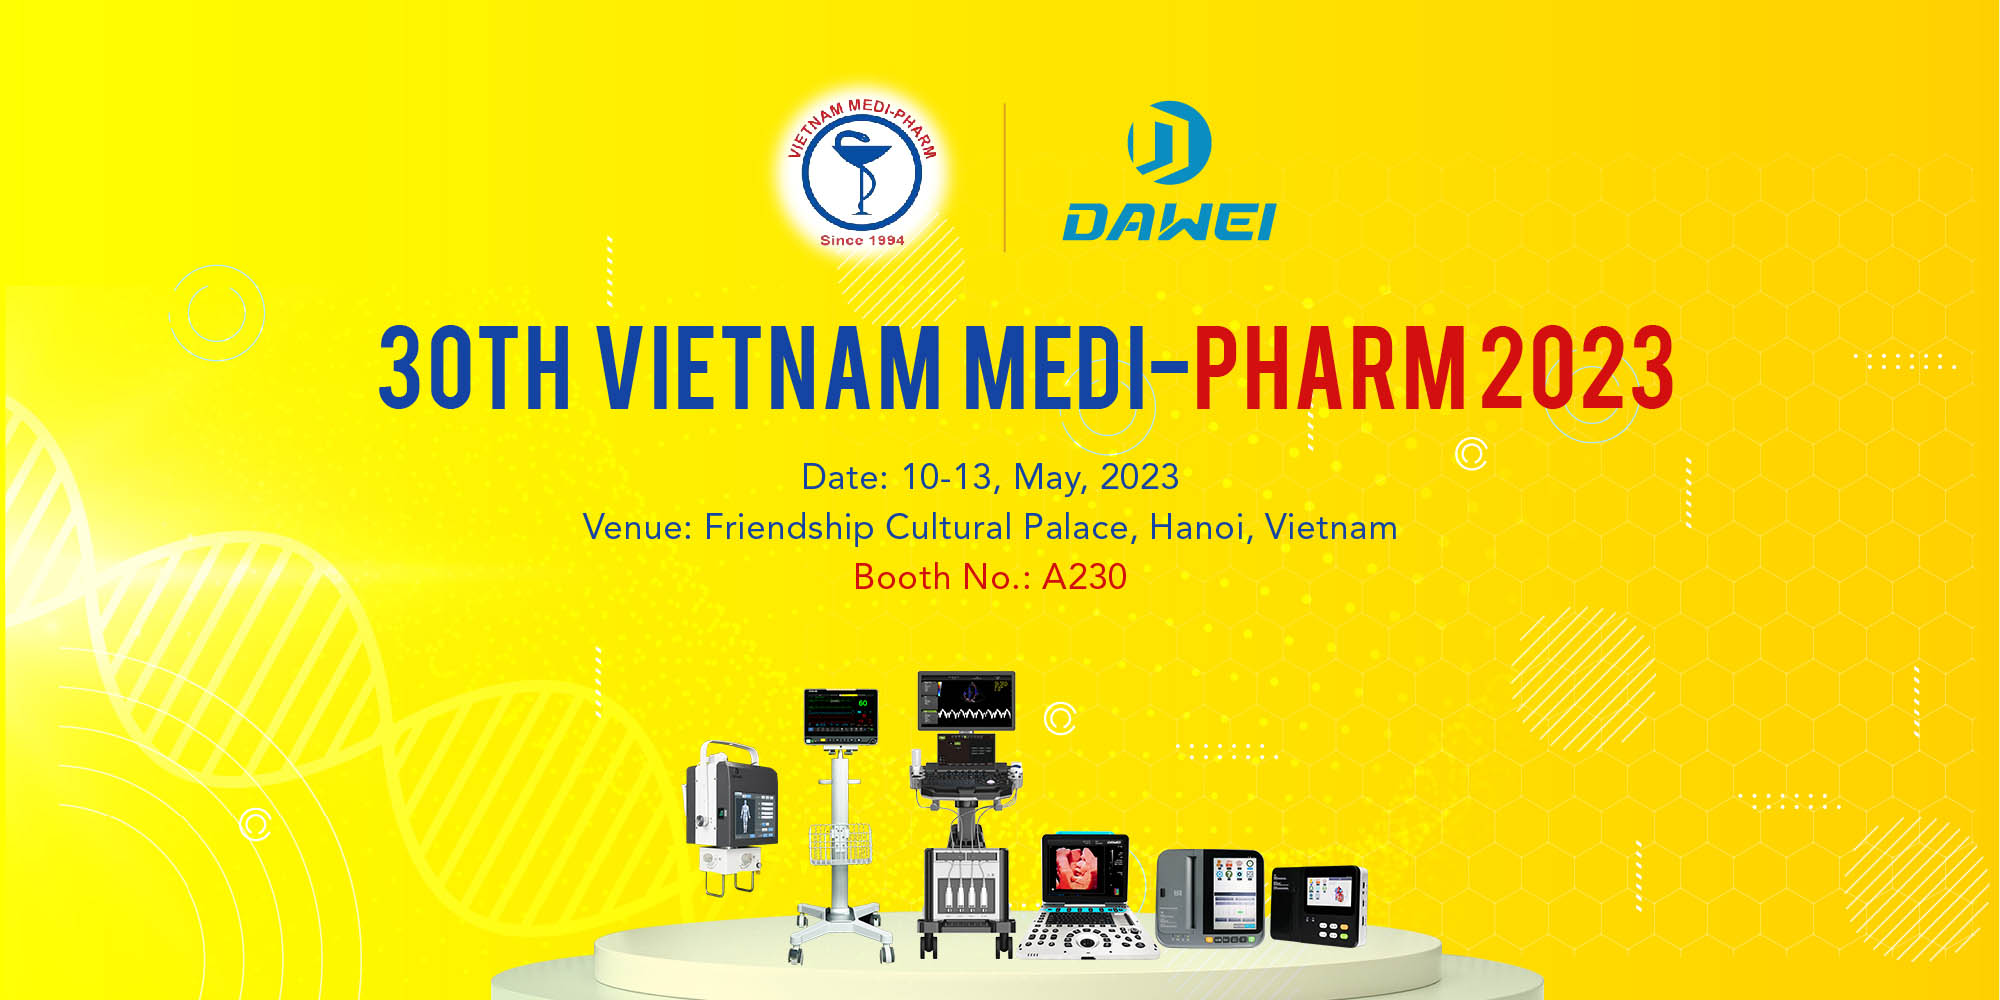 dawei medical በ 30TH Vietnam Medi-Pharm 2023 ውስጥ ይሳተፋል